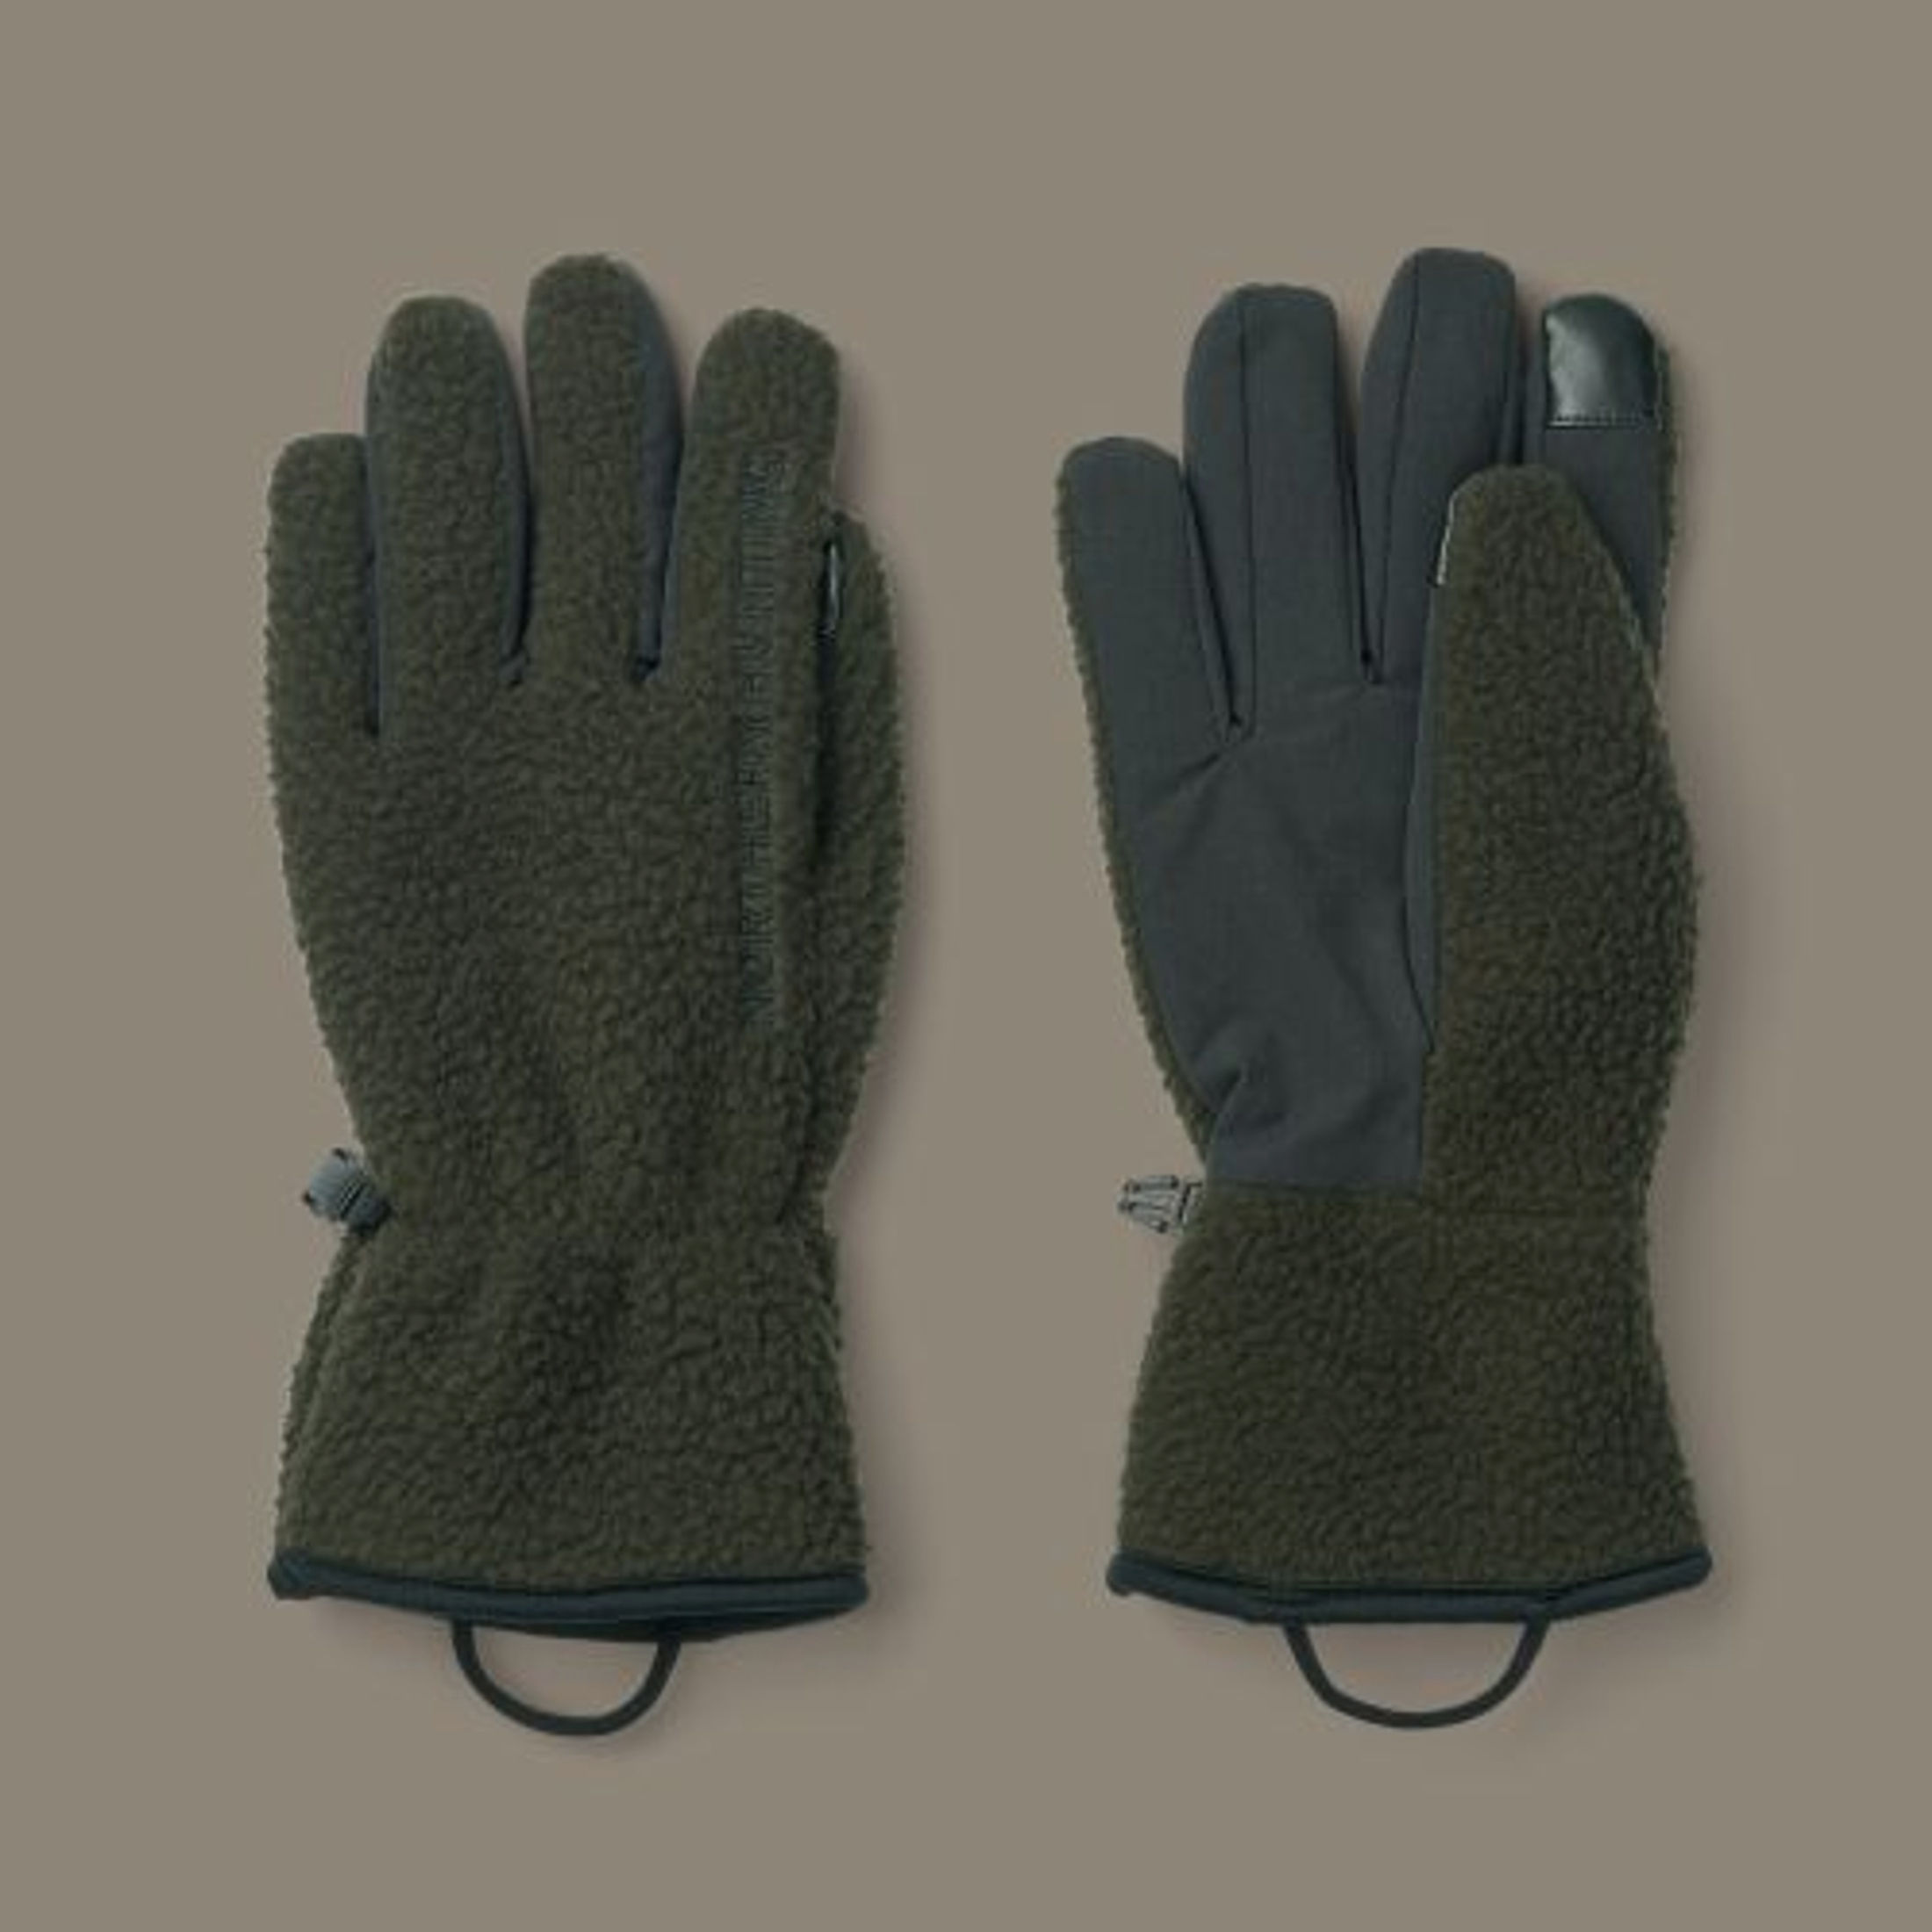 Northern Hunting Unisex Handschuhe Atli Gr?n XL/2XL